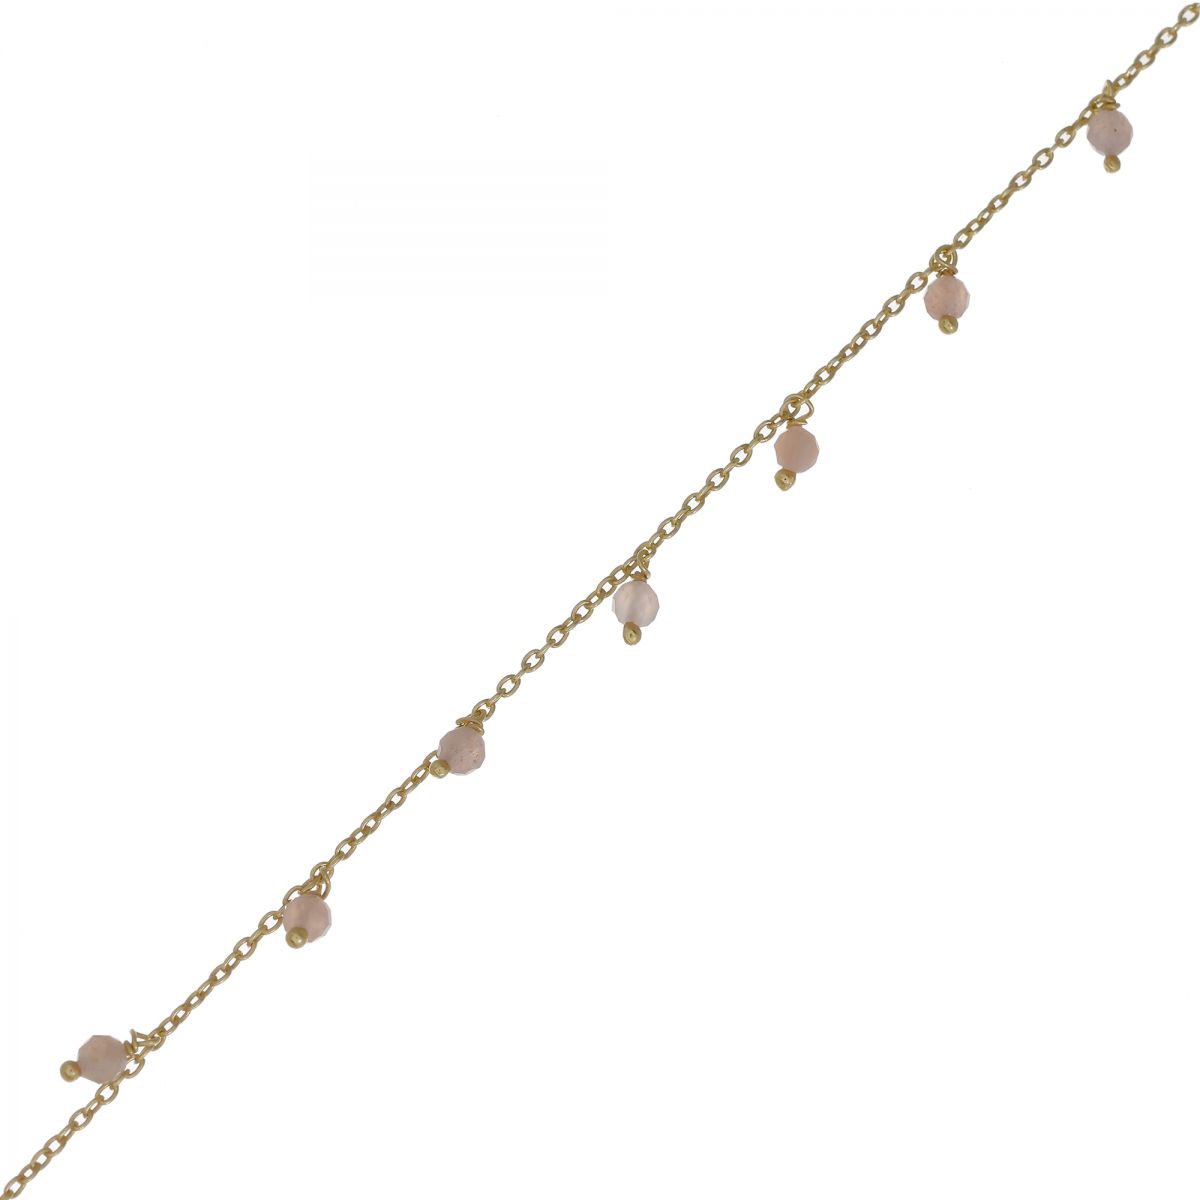 ff bracelet 3mm 8 pendants peach moonstone beads g pl